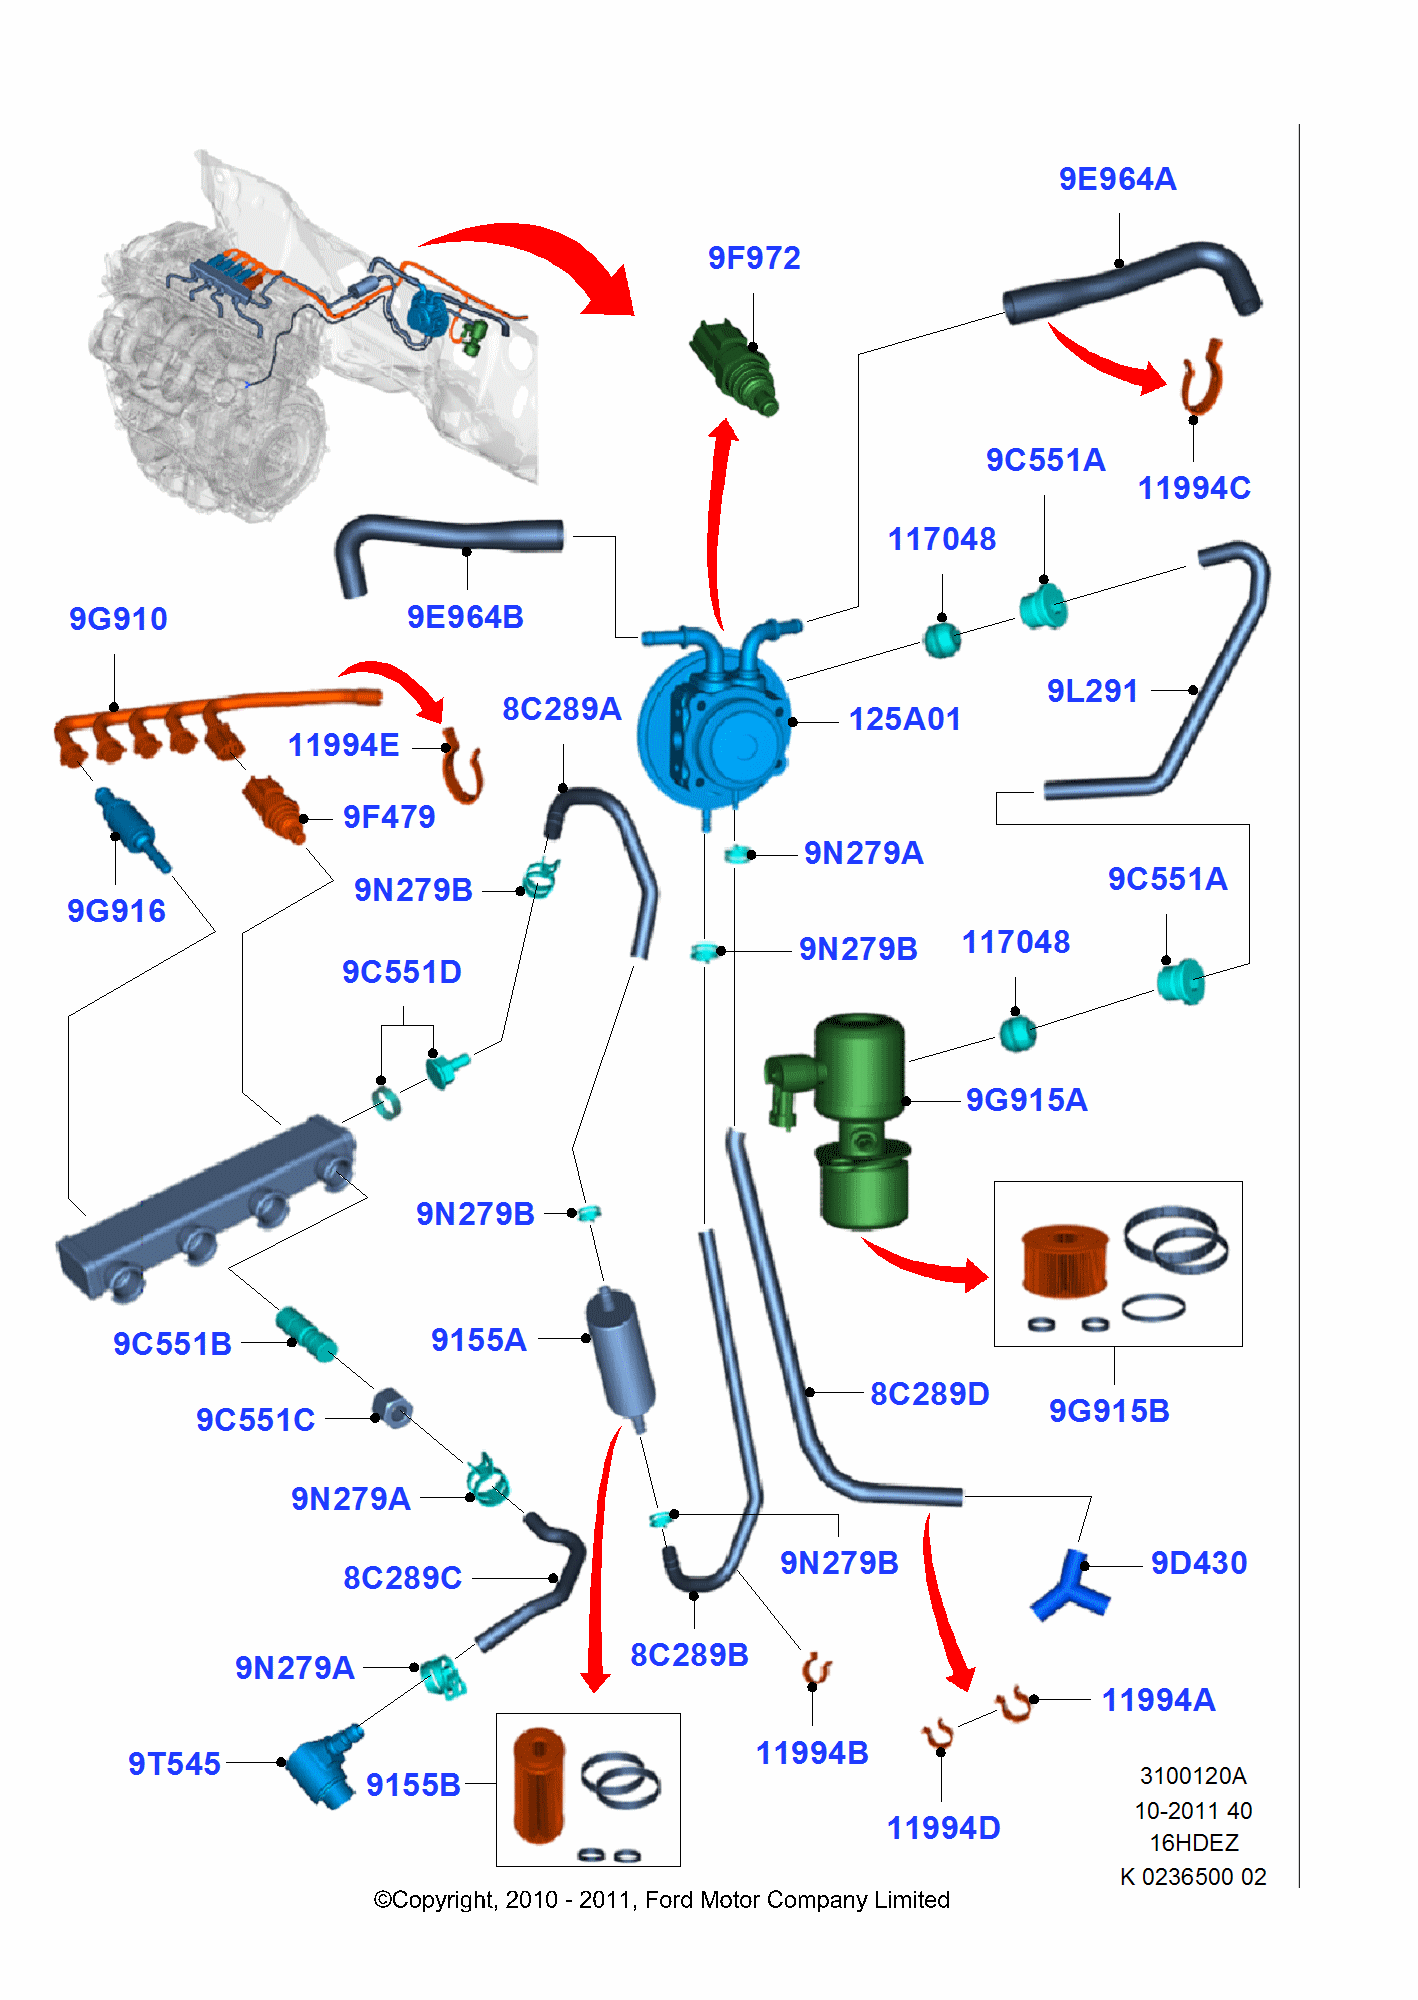 Alternative Fuel System for Ford Focus Focus 2008-2011           (CB4)